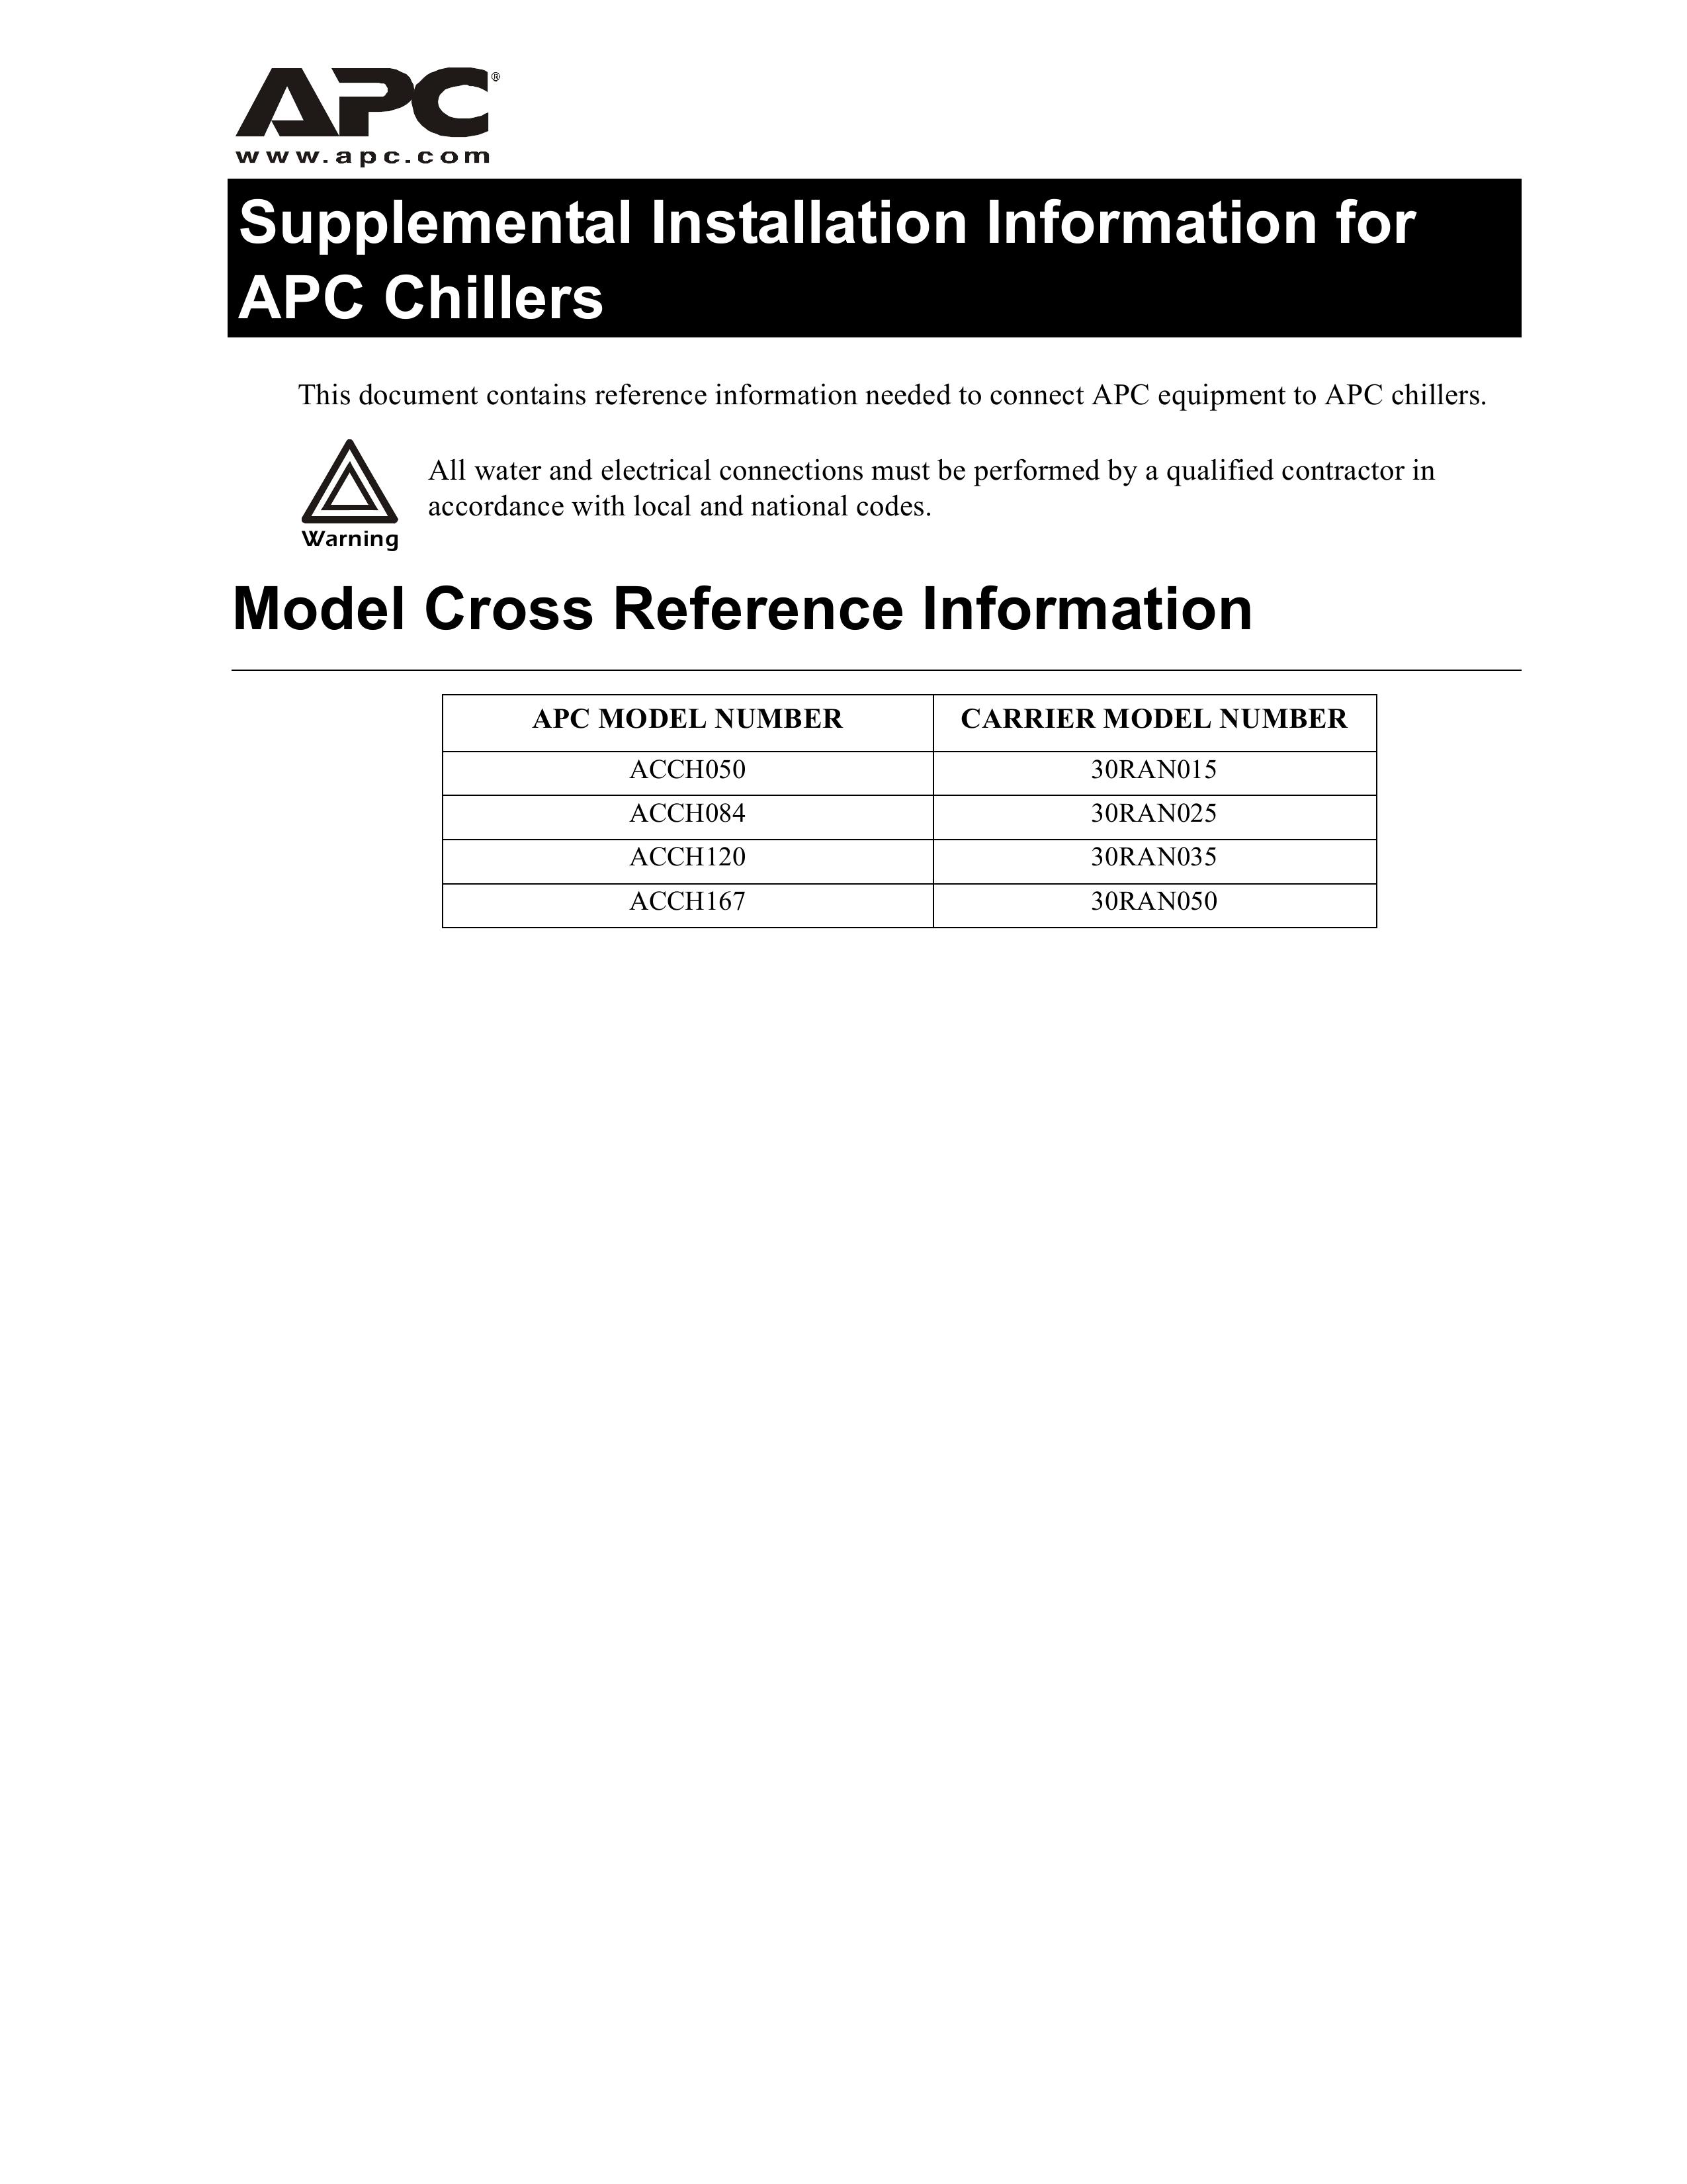 American Power Conversion ACCH167 Refrigerator User Manual